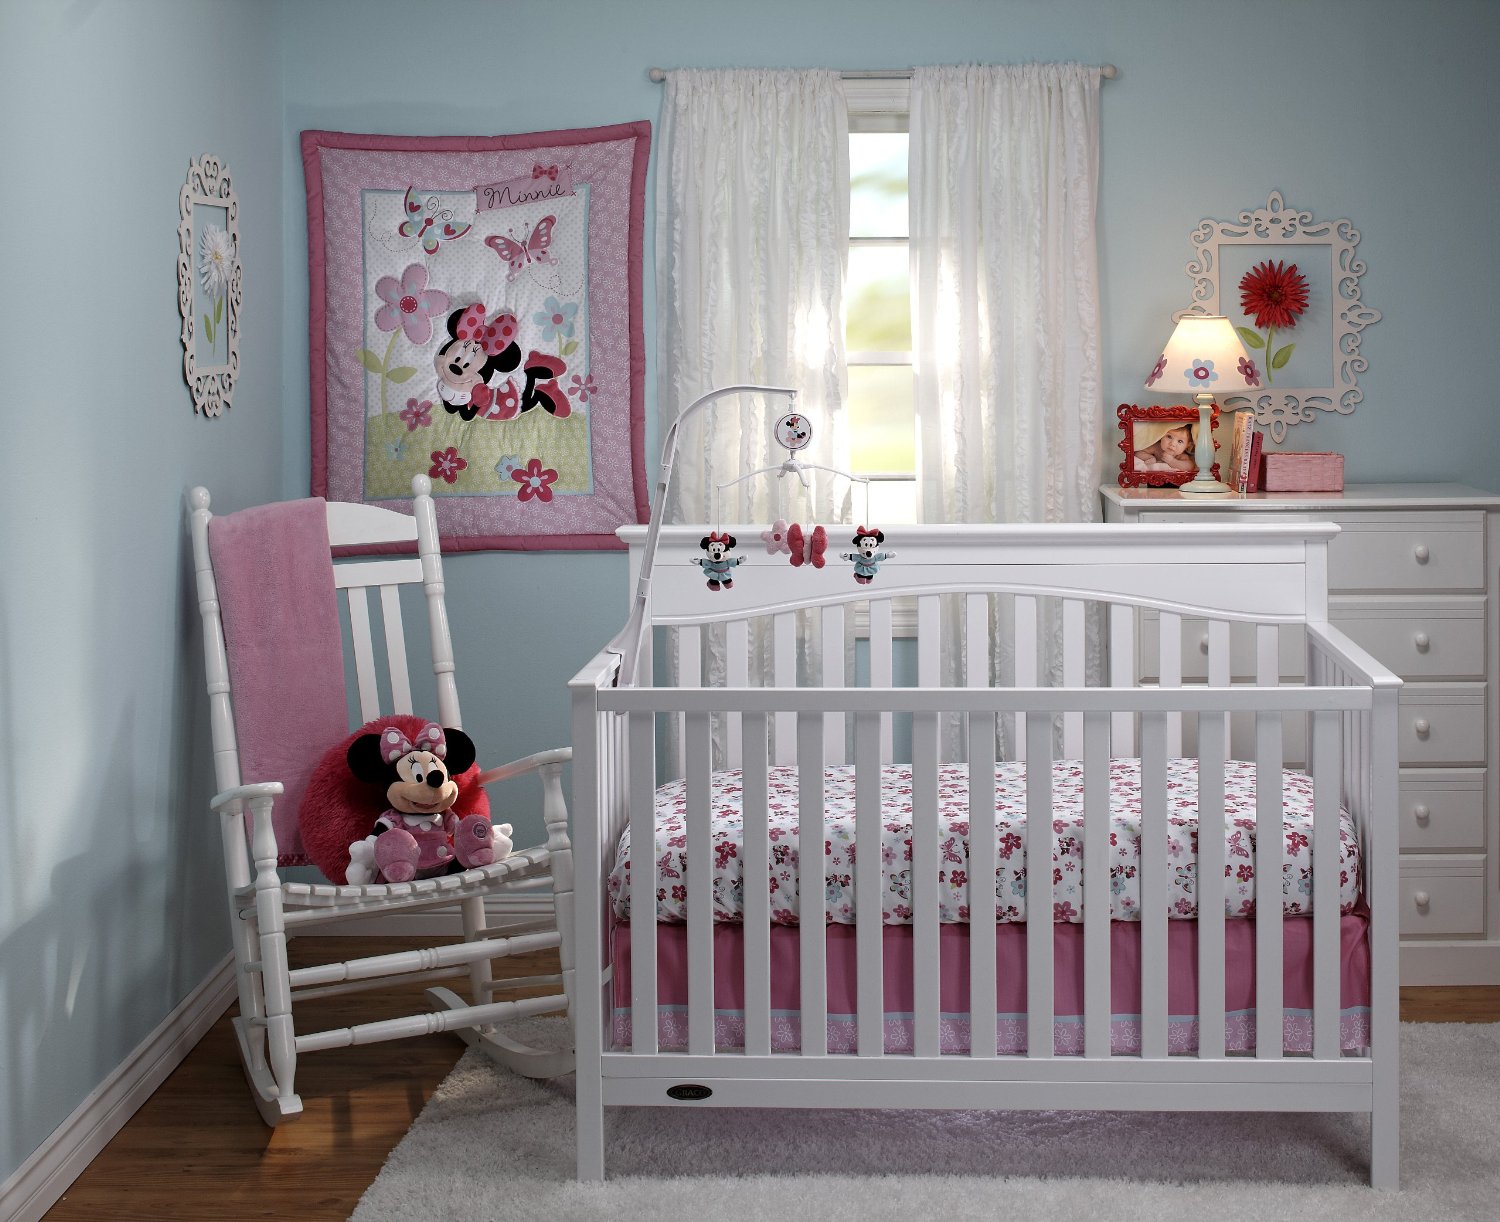 minnie mouse baby crib set